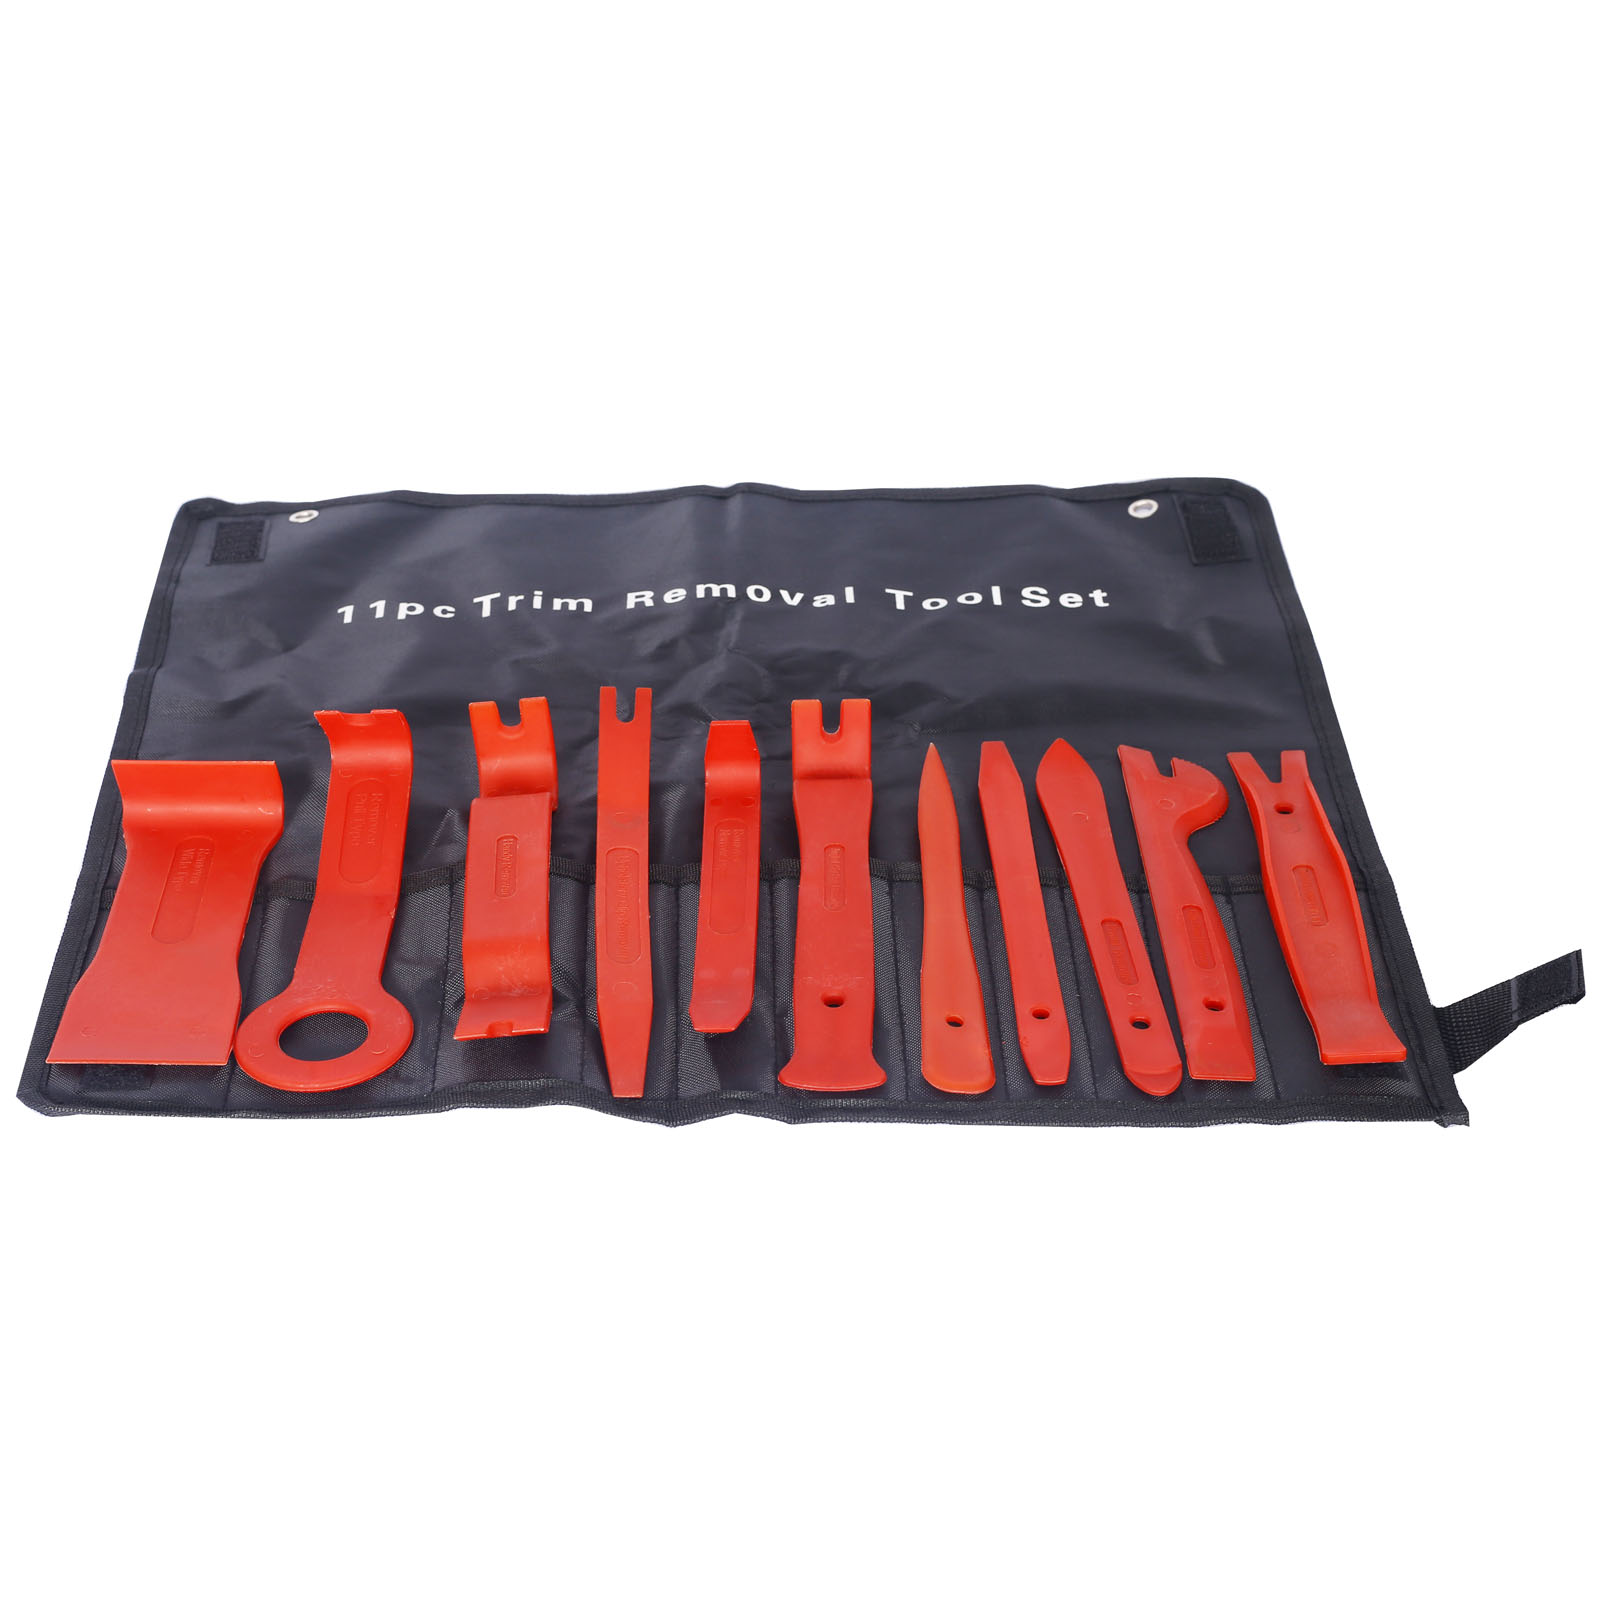 Automotive Trim and Panel Removal Tool Set - 11 Pieces with Bonus Tool